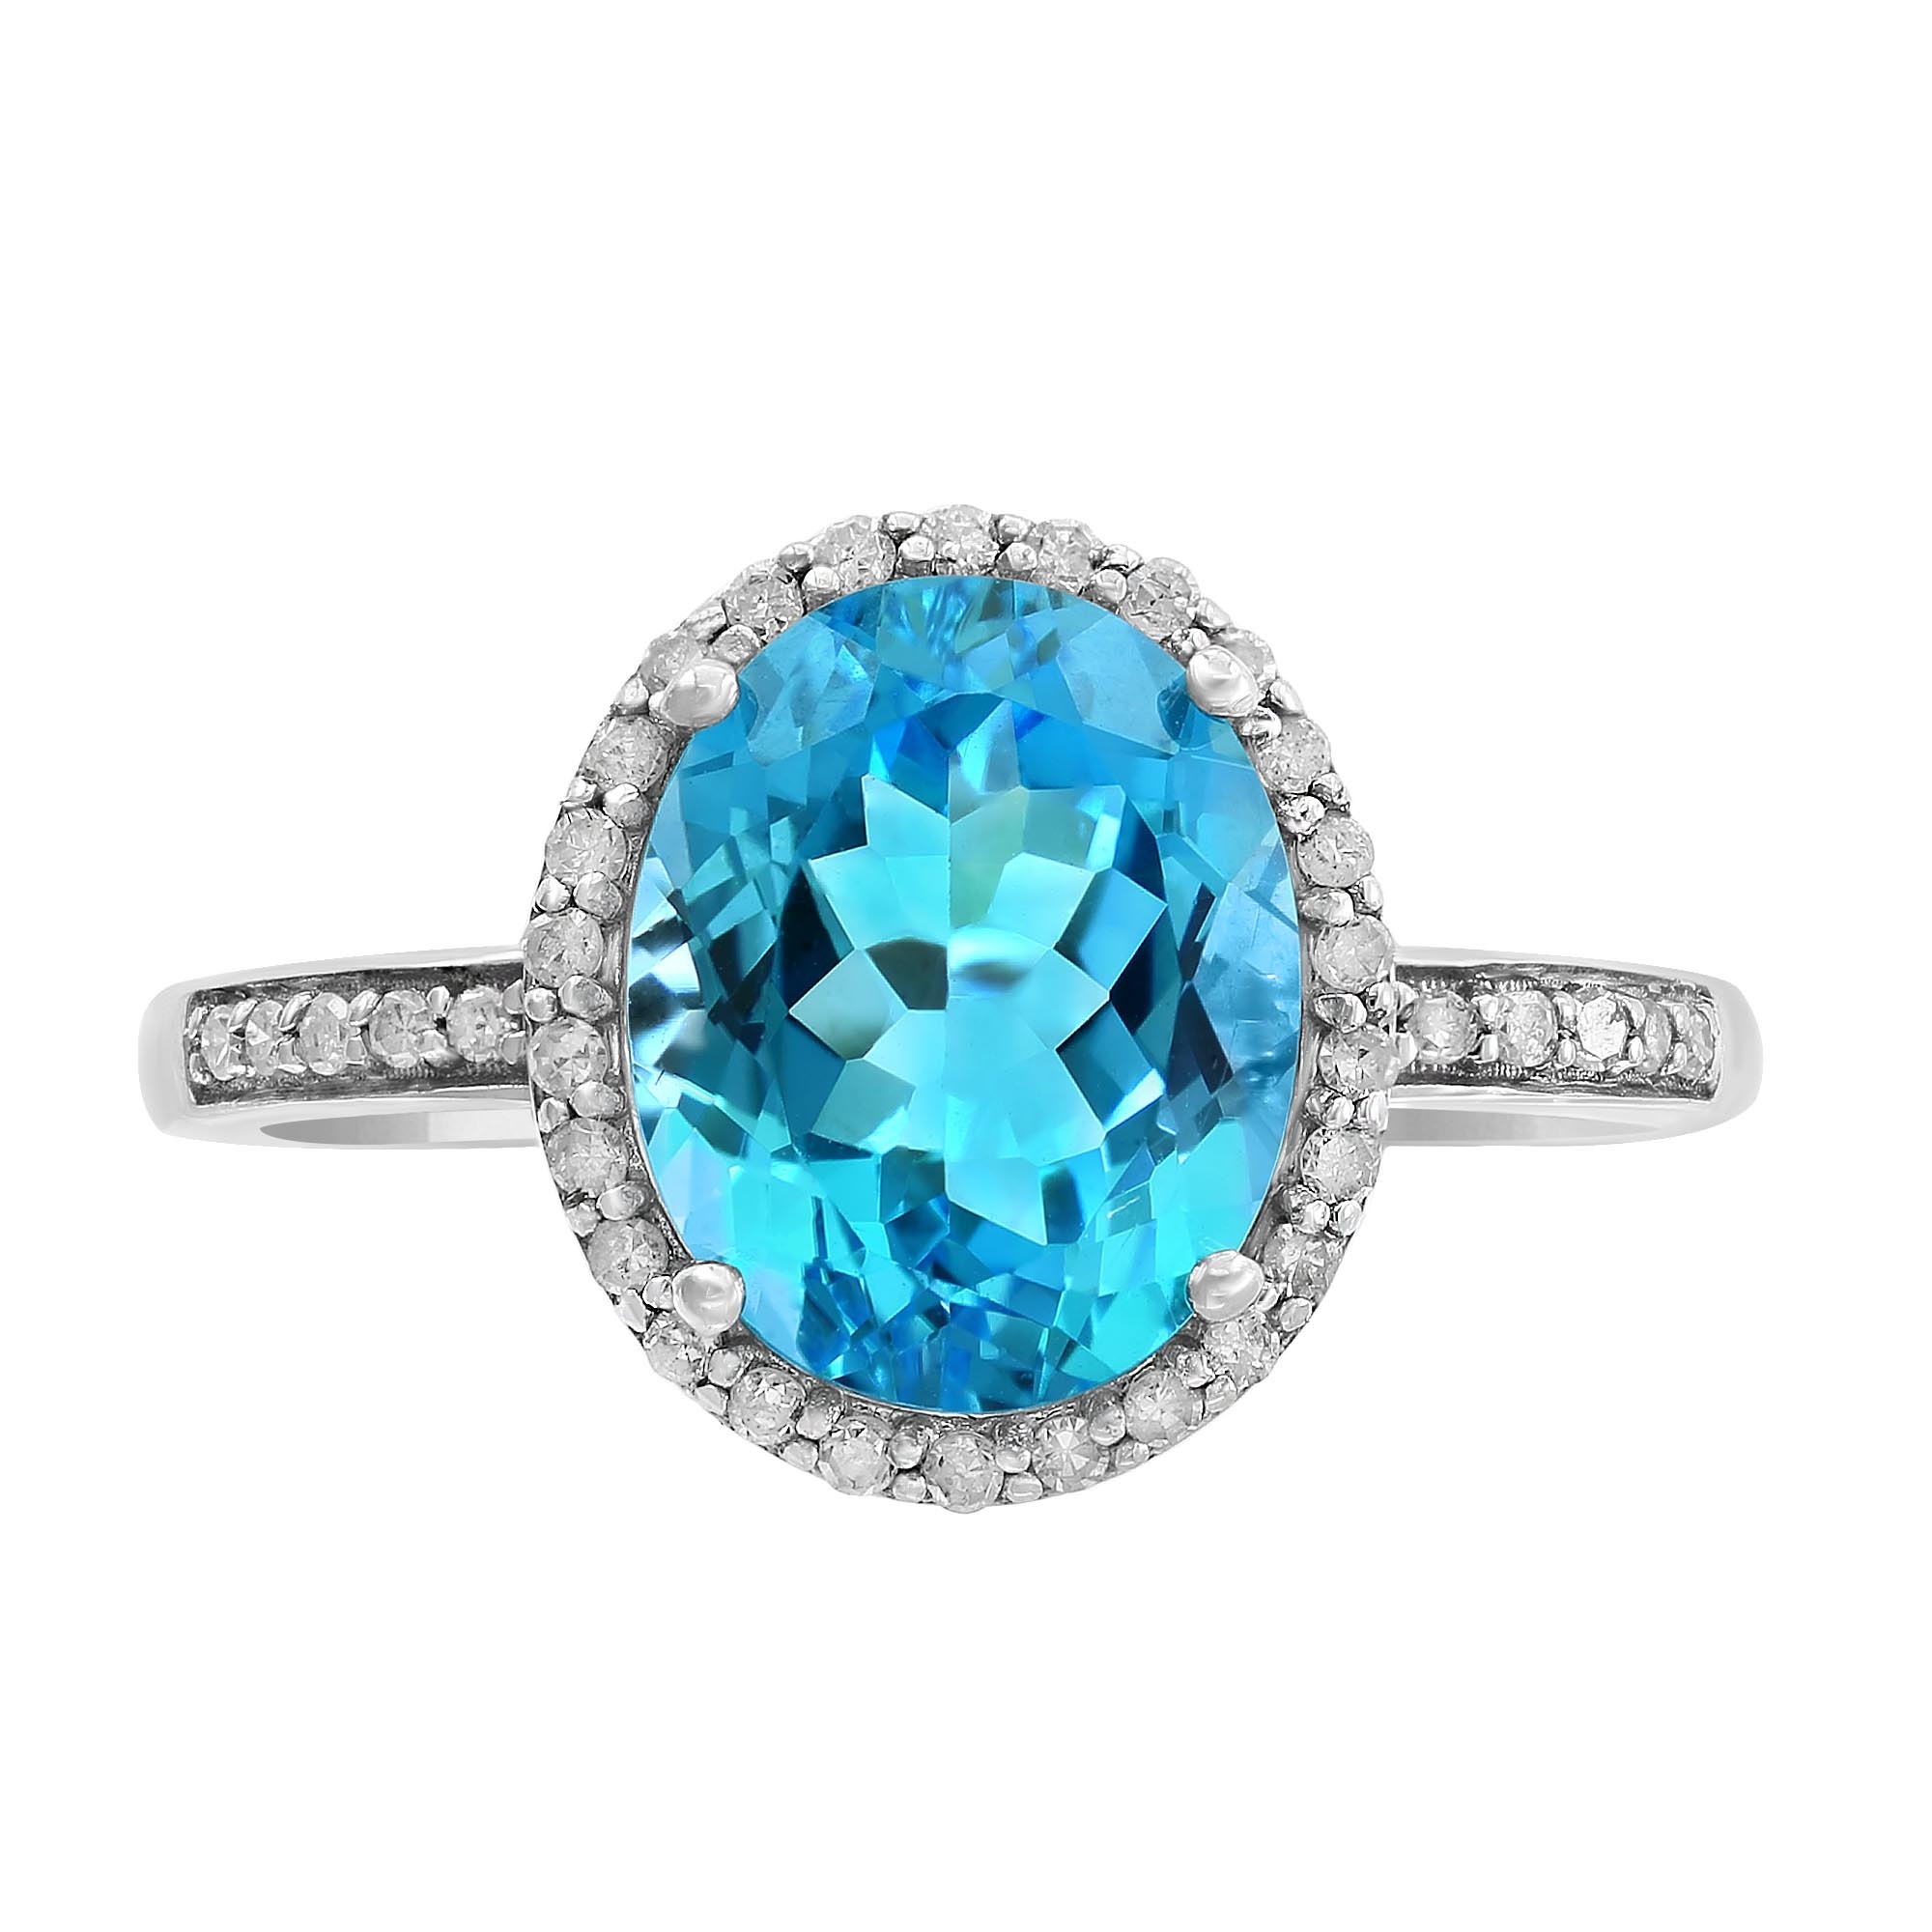 White gold Swiss blue topaz and diamond ring, Maison Birks, Fine jewelry, Elegant design, 2000x2000 HD Handy